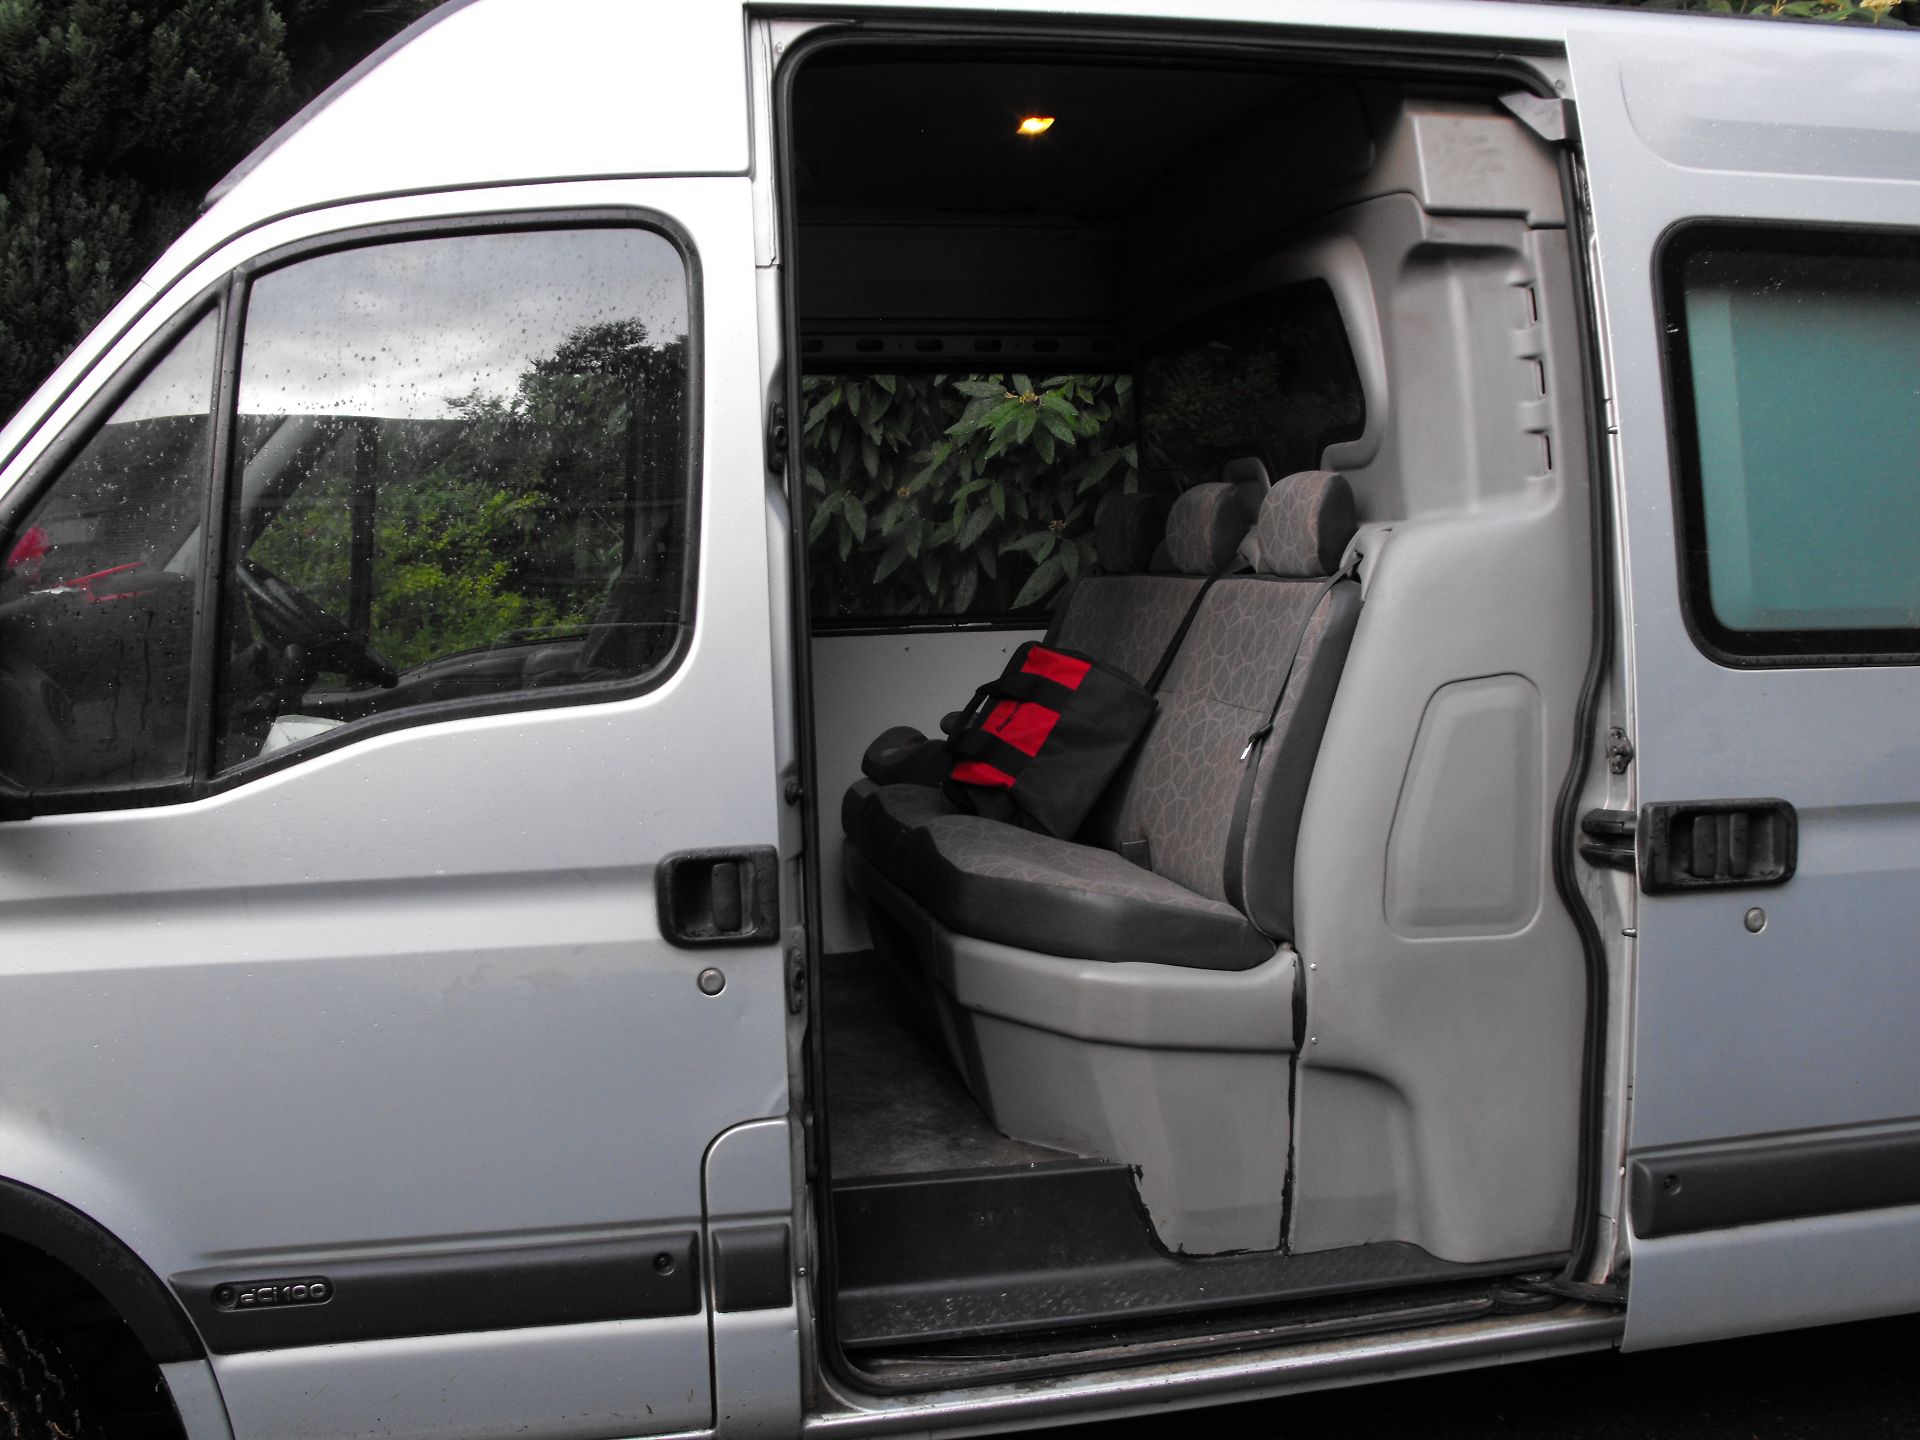 2009 Renault Master Double cab van 6 seats - Image 5 of 10